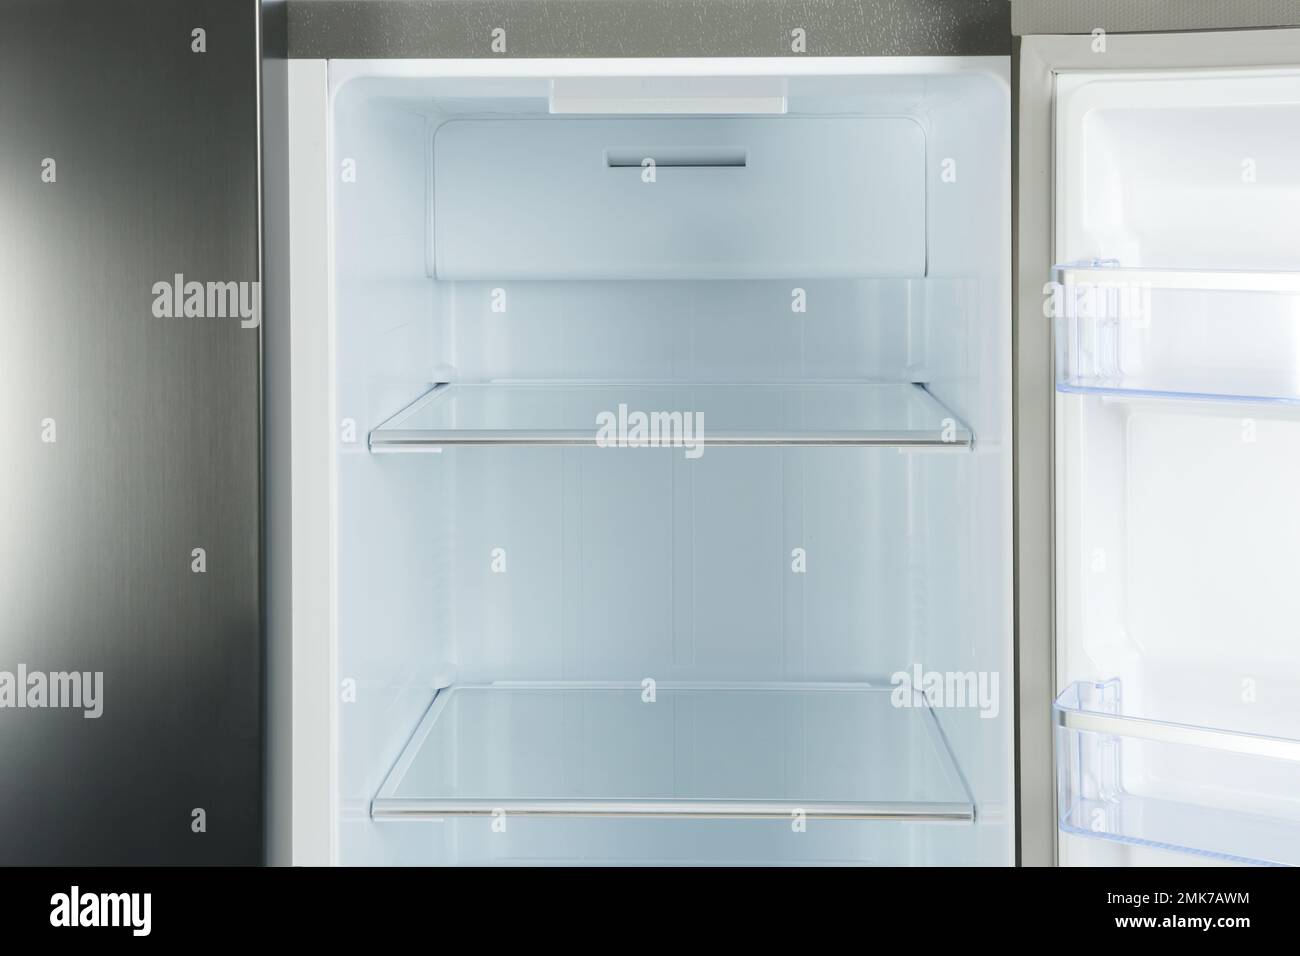 Shelves of empty modern refrigerator, closeup view Stock Photo